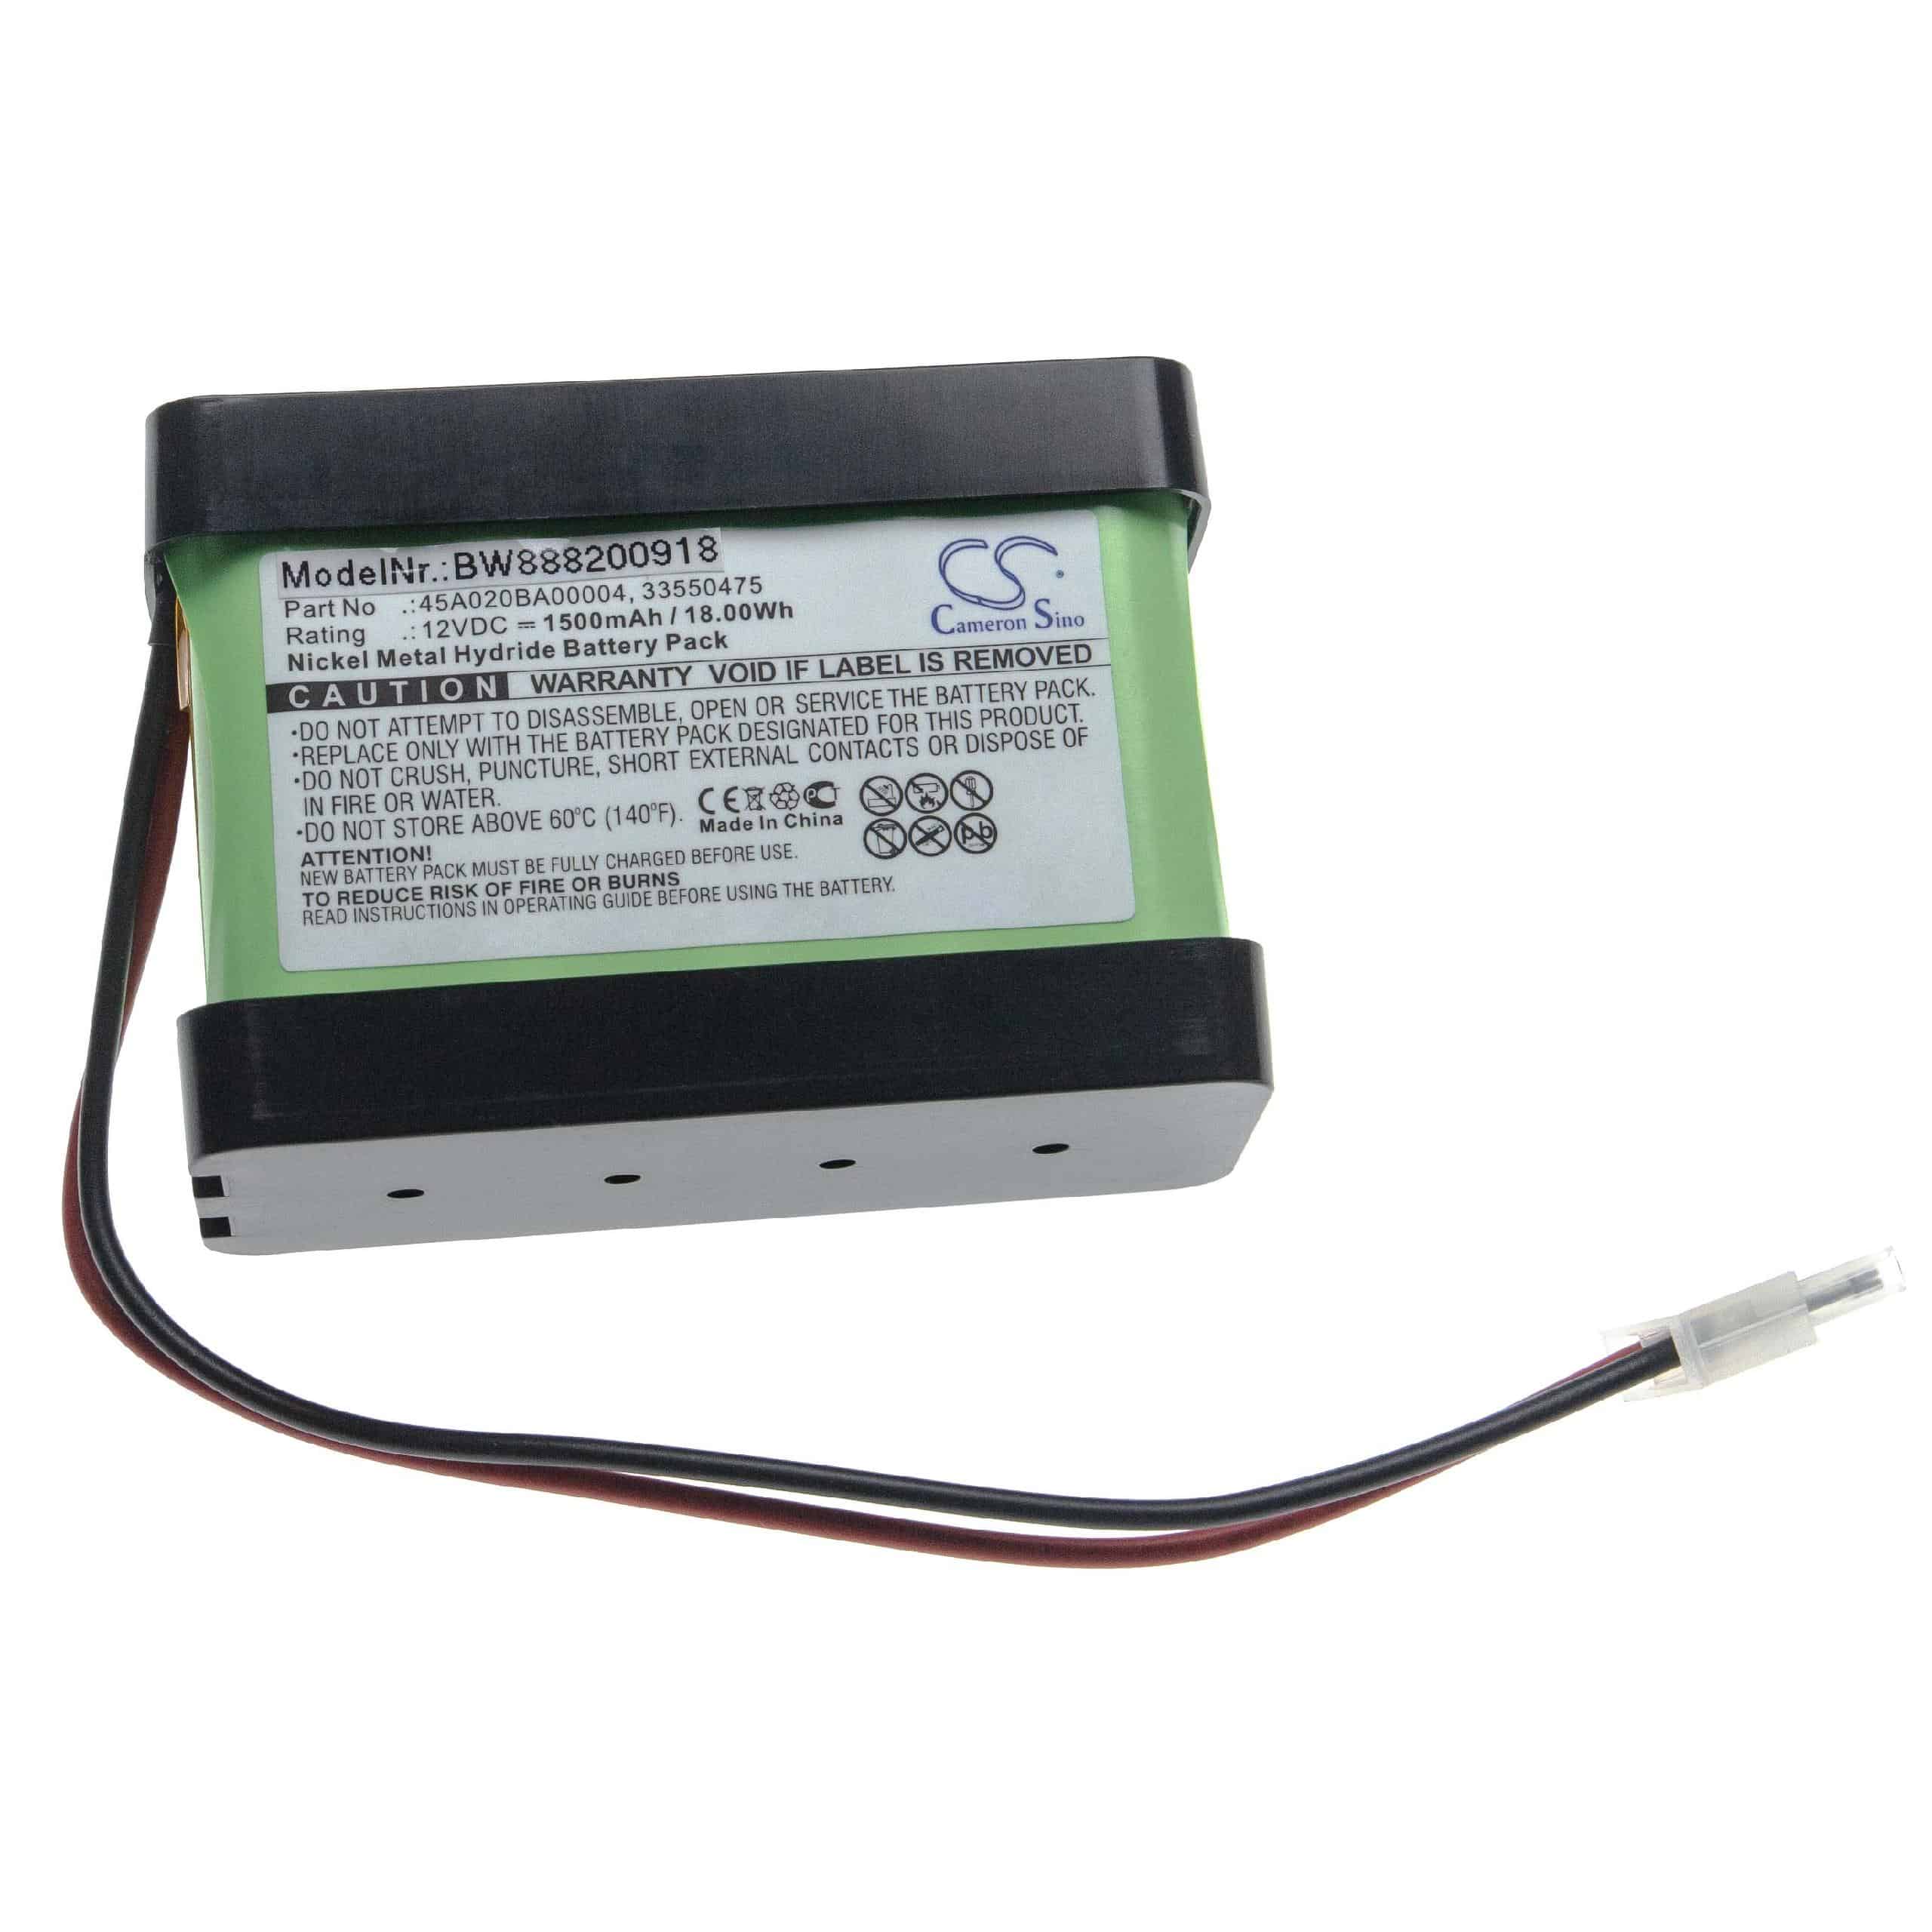 Sliding Gate Operator Battery Replacement for Besam 33550475, 550473, 45A020BA00004, 550475 - 1500mAh 12V NiMH